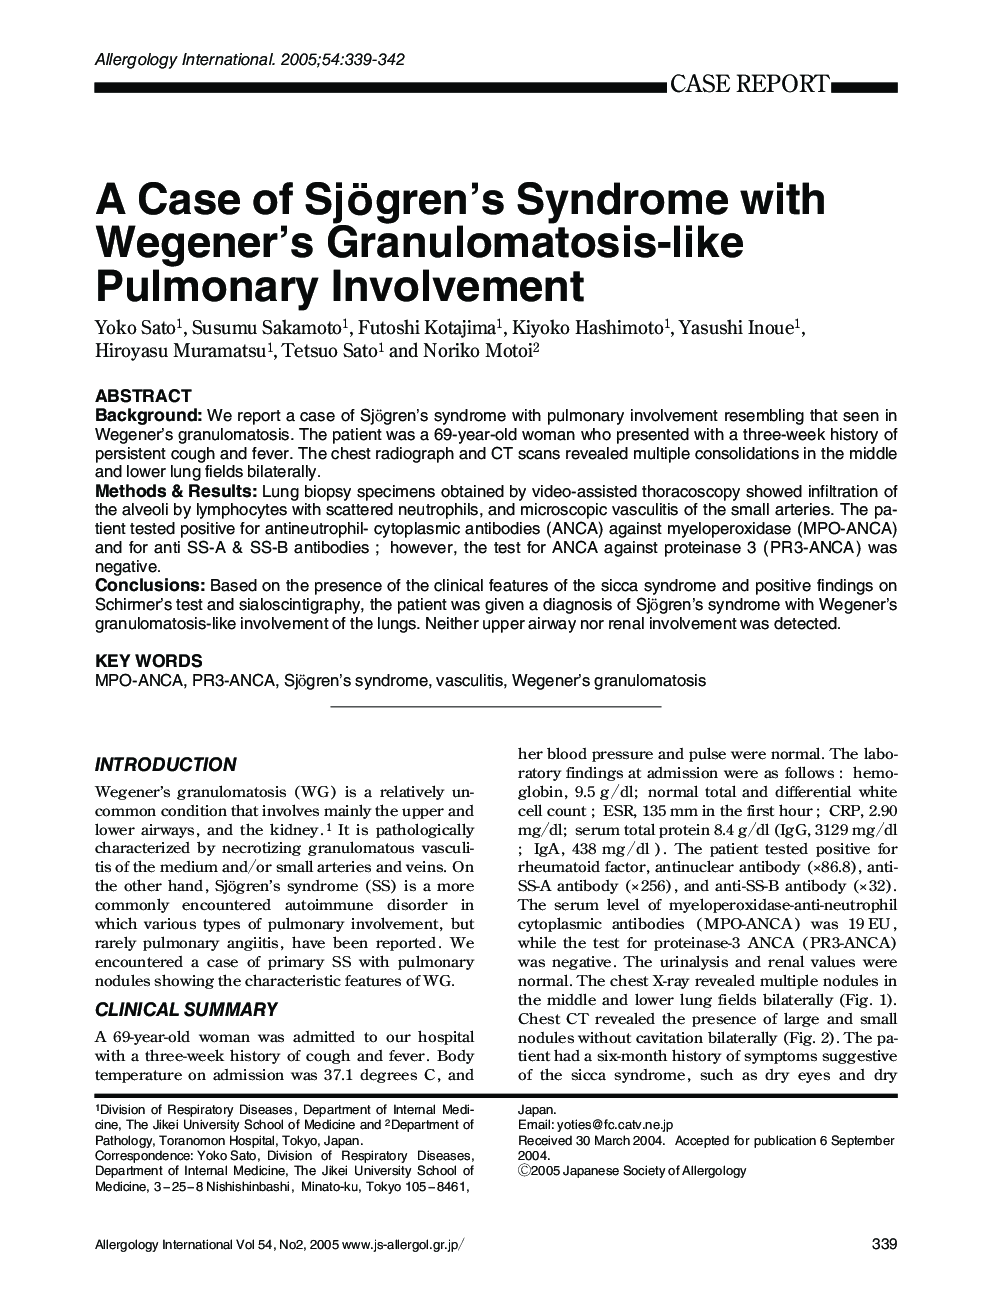 A Case of Sjögren's Syndrome with Wegener's Granulomatosis-like Pulmonary Involvement